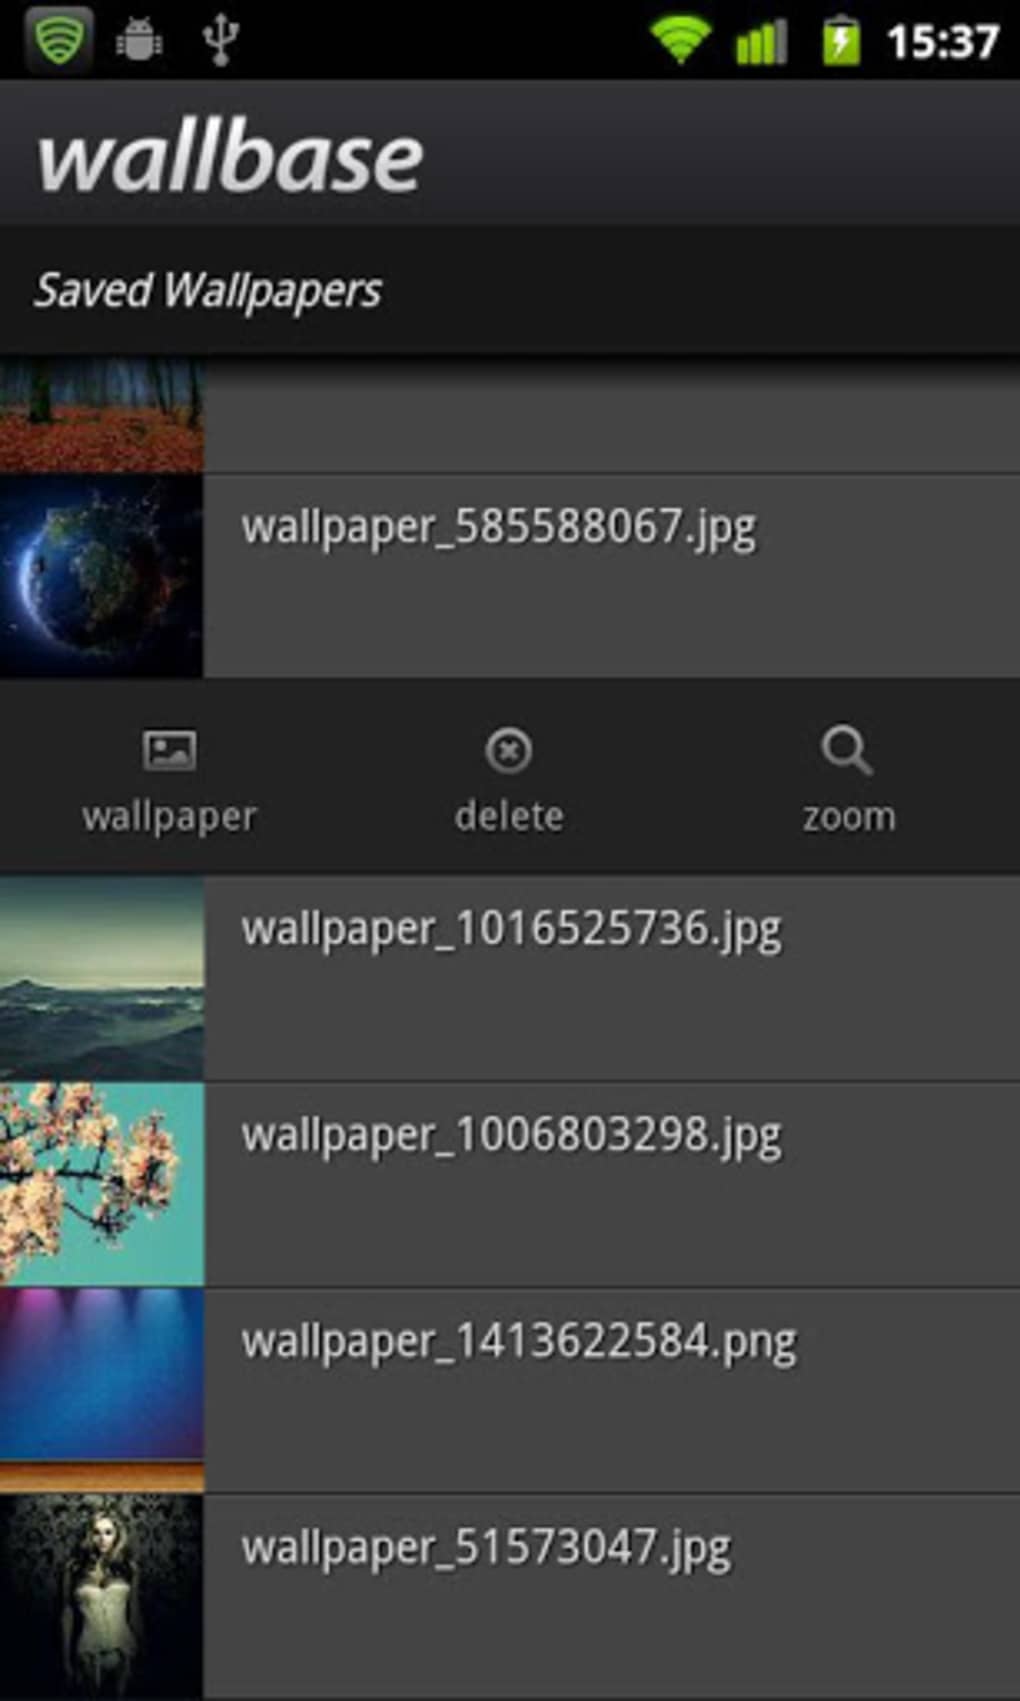 Wallbase HD Wallpapers para Android - Descargar